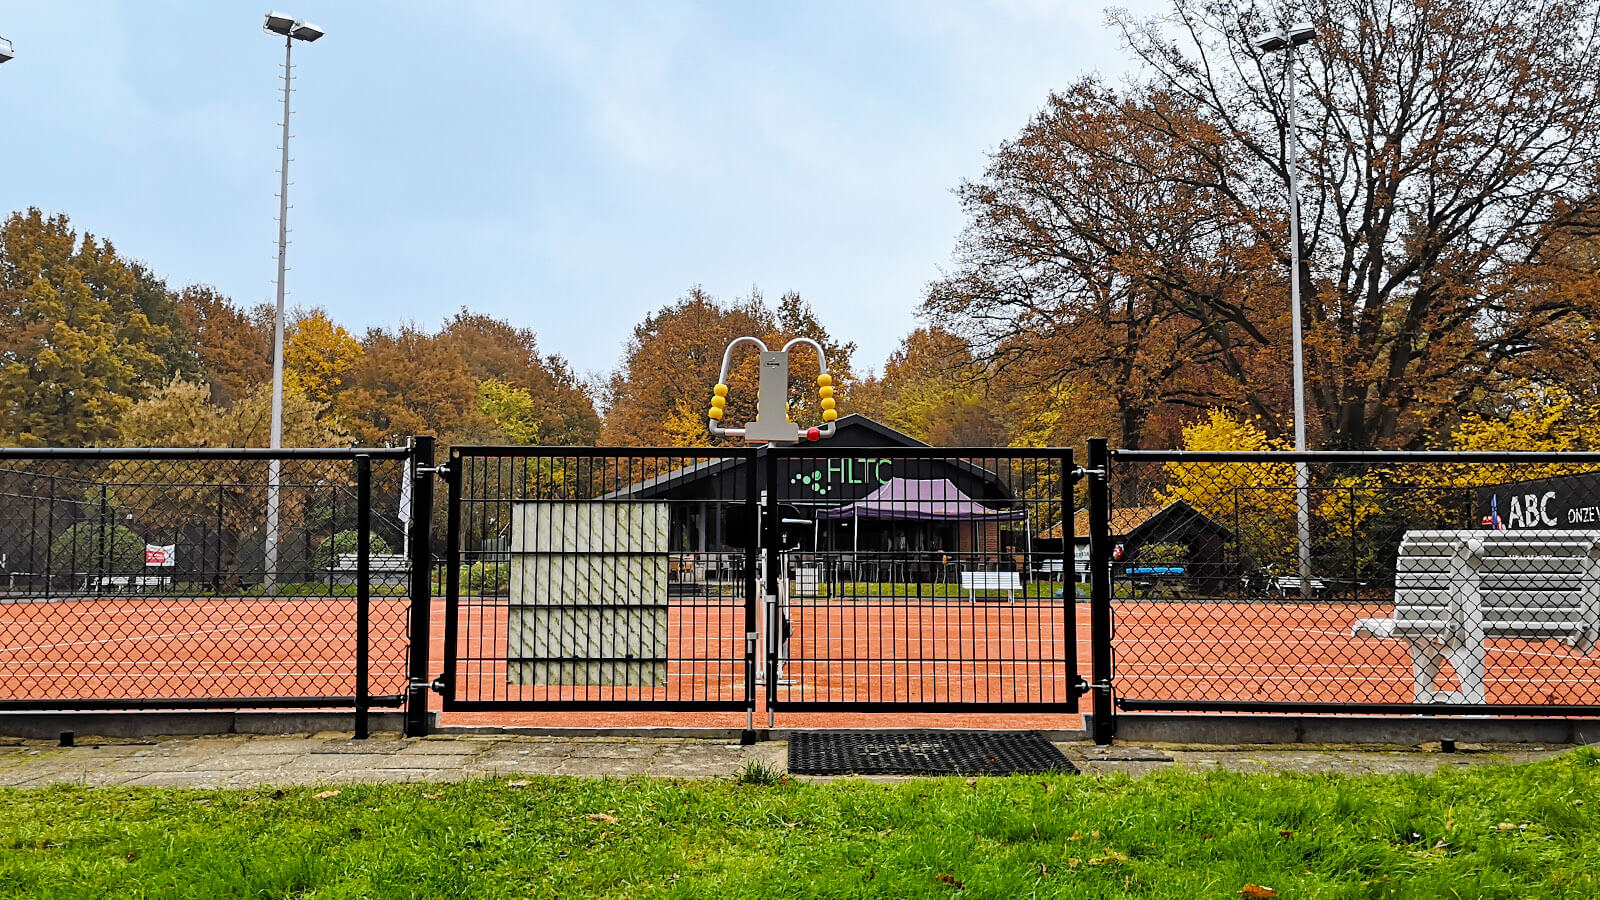 HLTC - Hekwerk tennisbaan